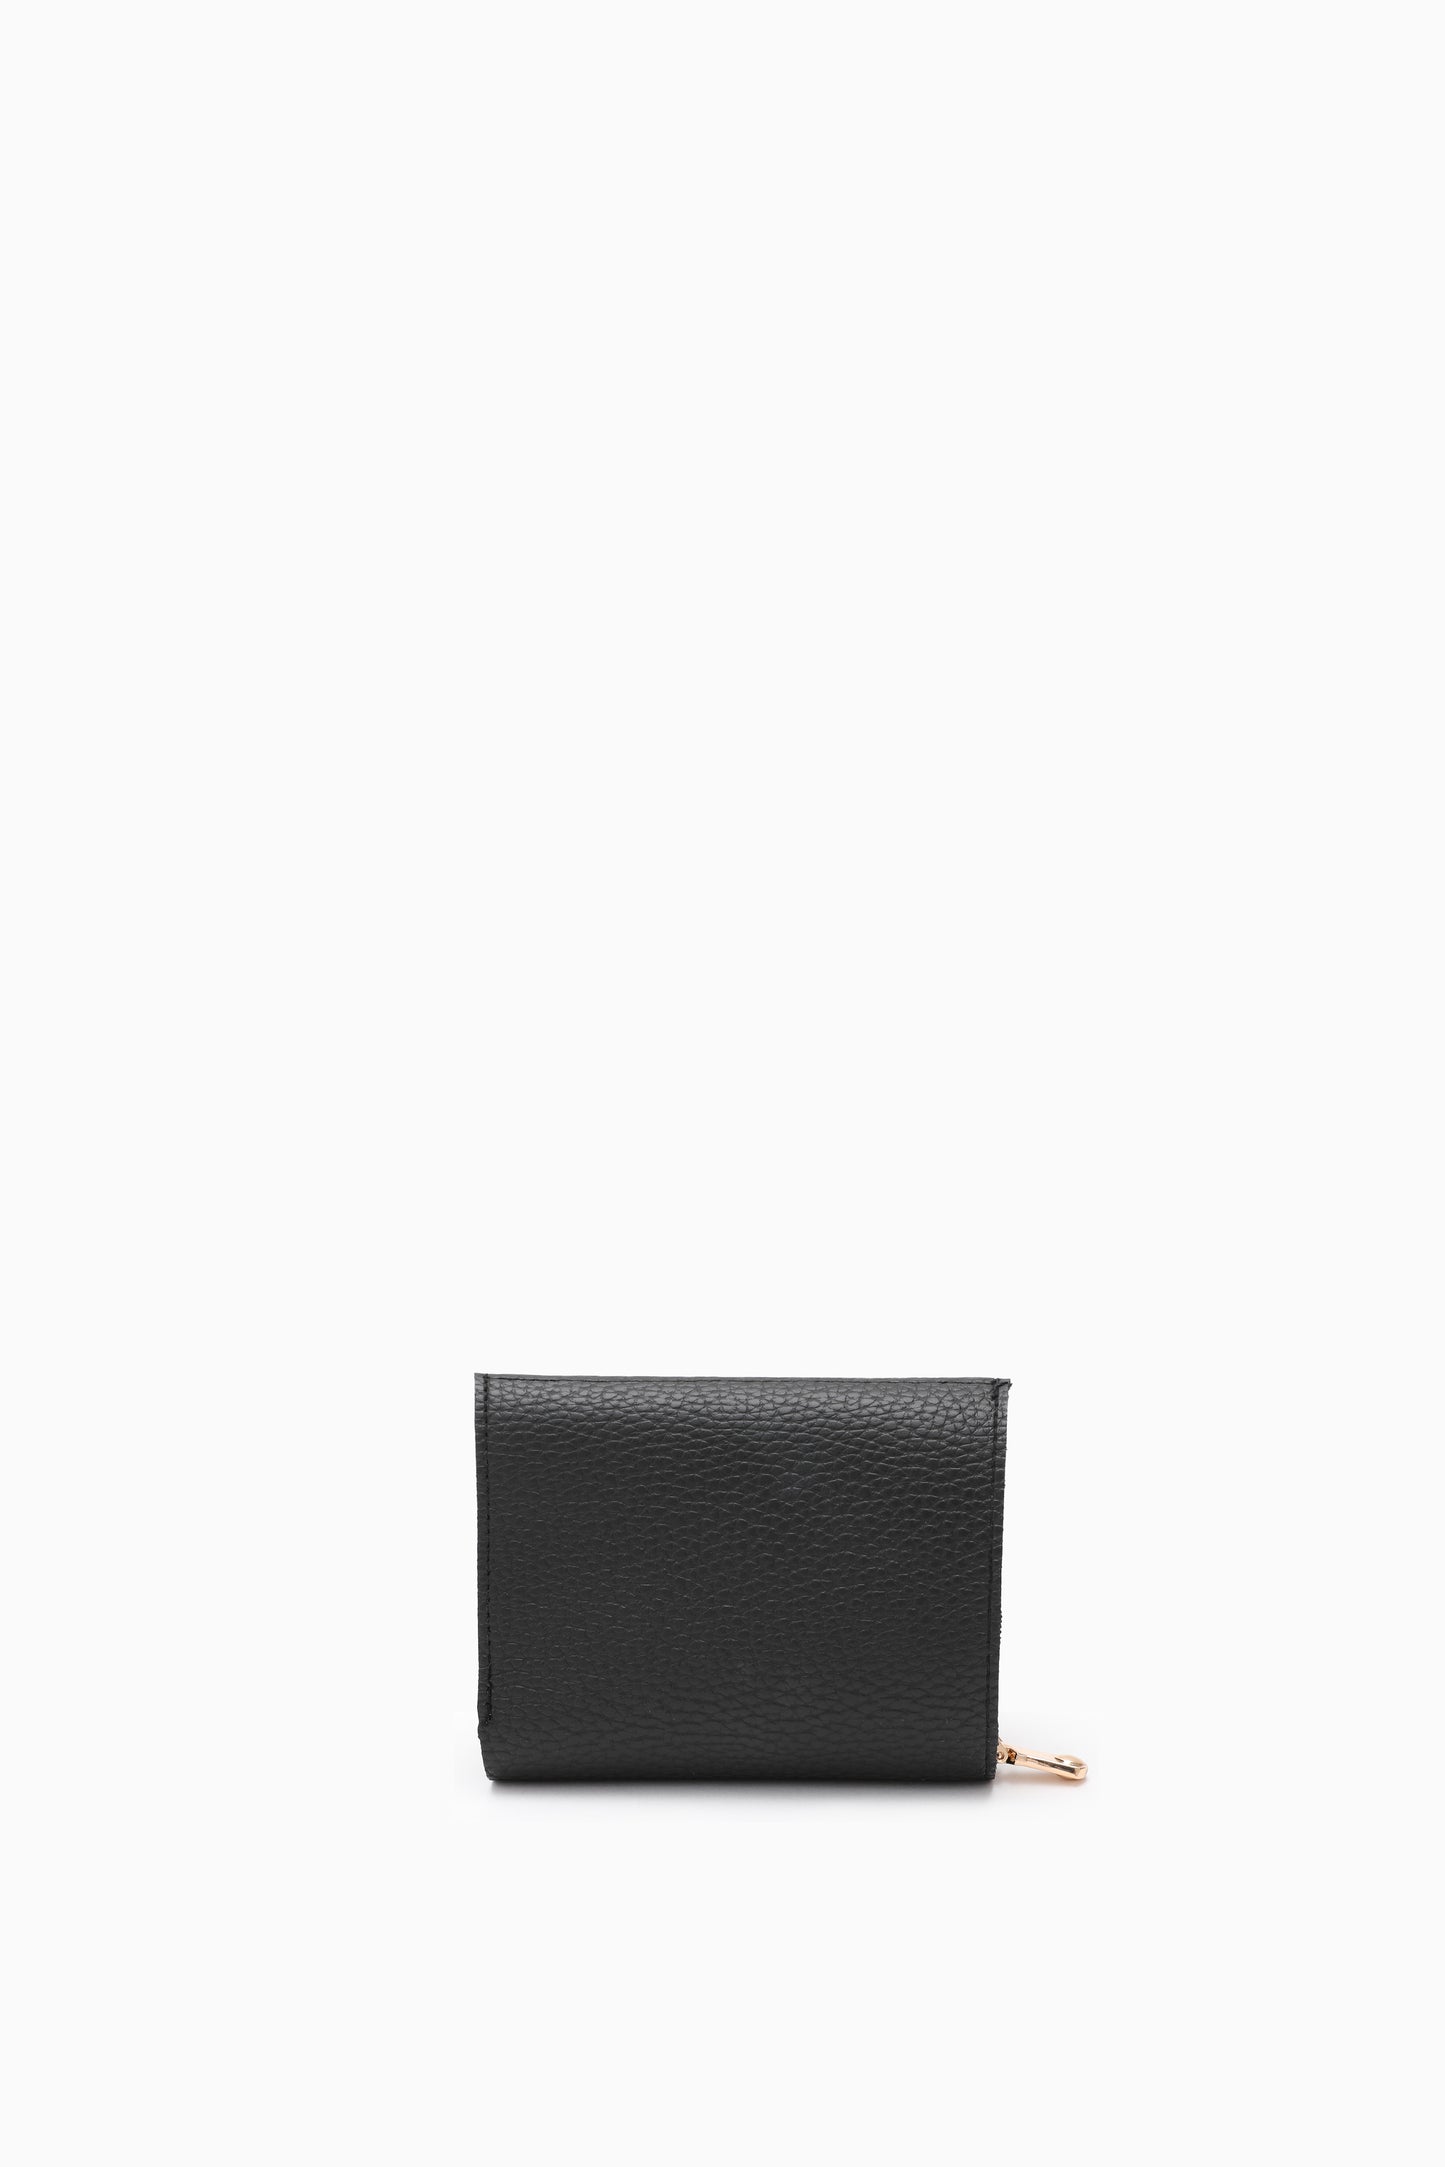 Card wallet - 21037- Black - bakkaclothing